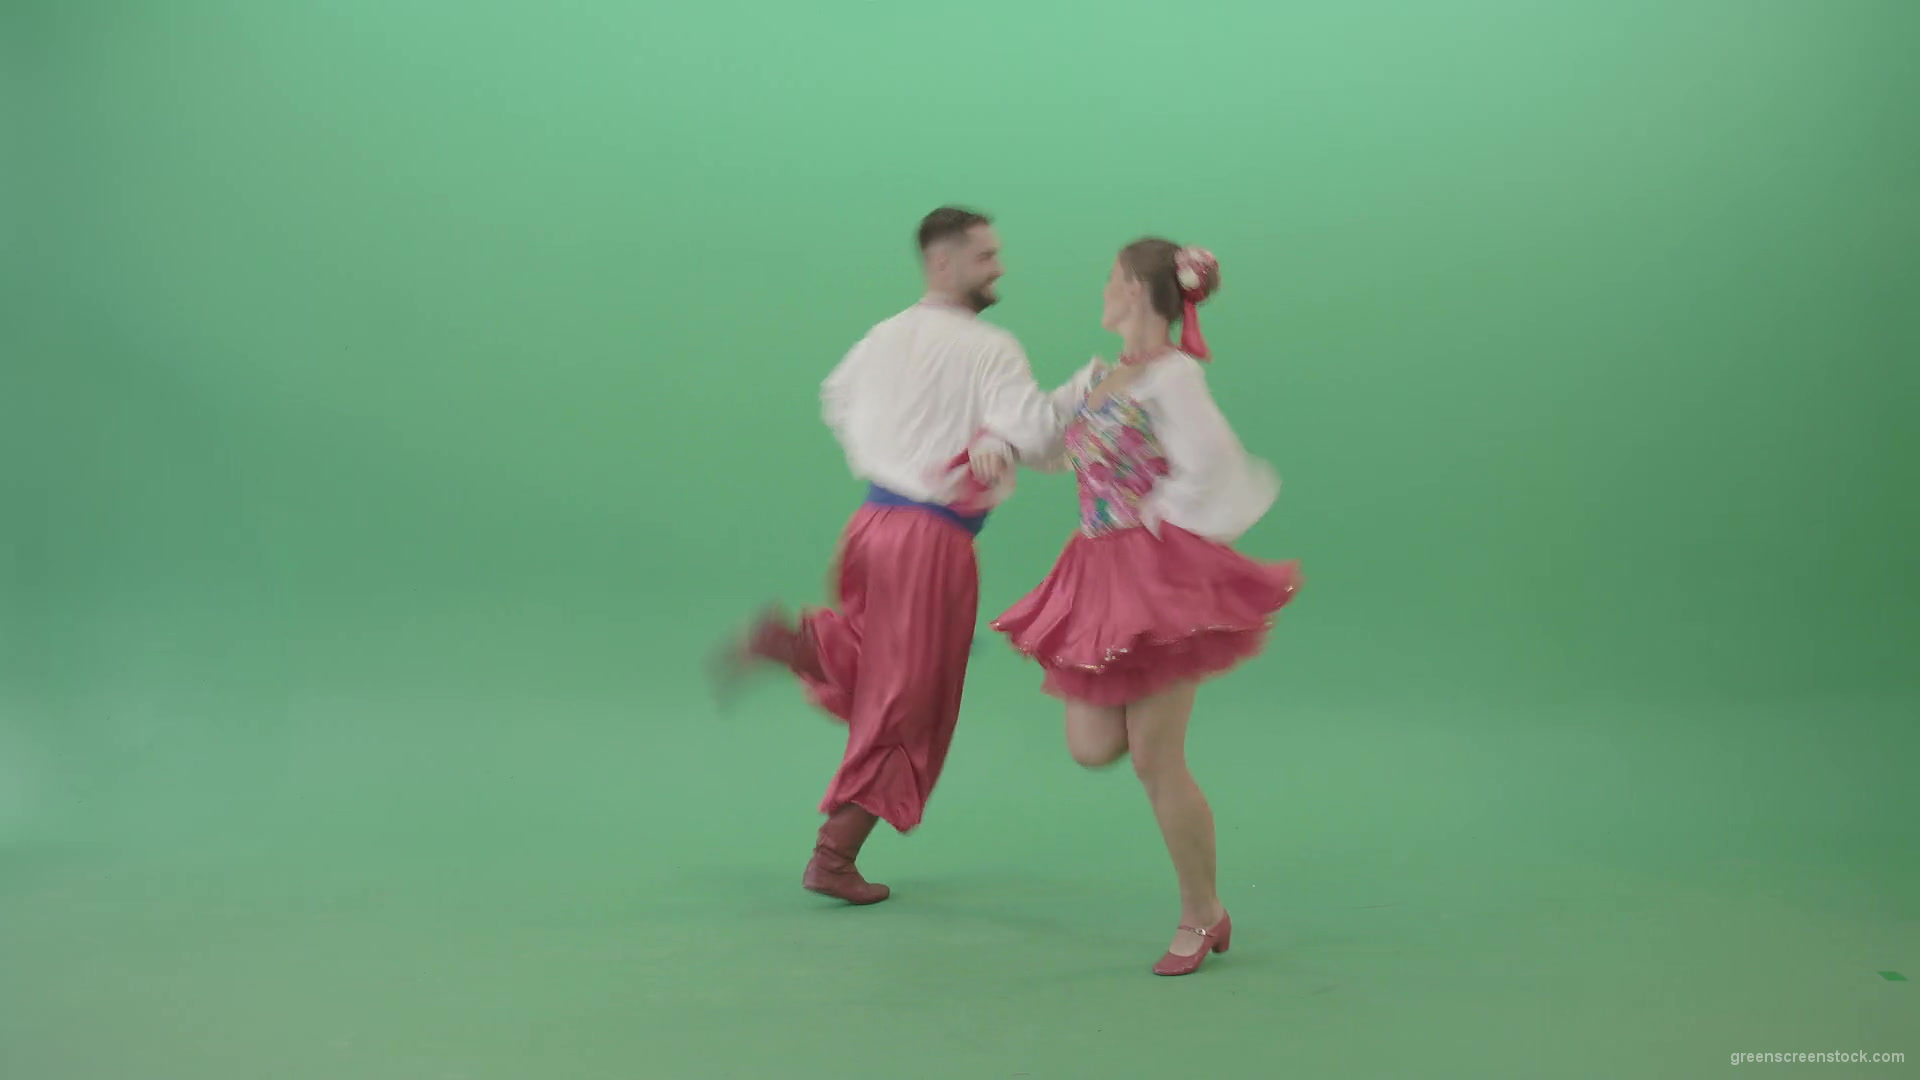 Ukraine-national-dancing-couple-shows-folk-dance-4K-Video-Footage-1920_002 Green Screen Stock